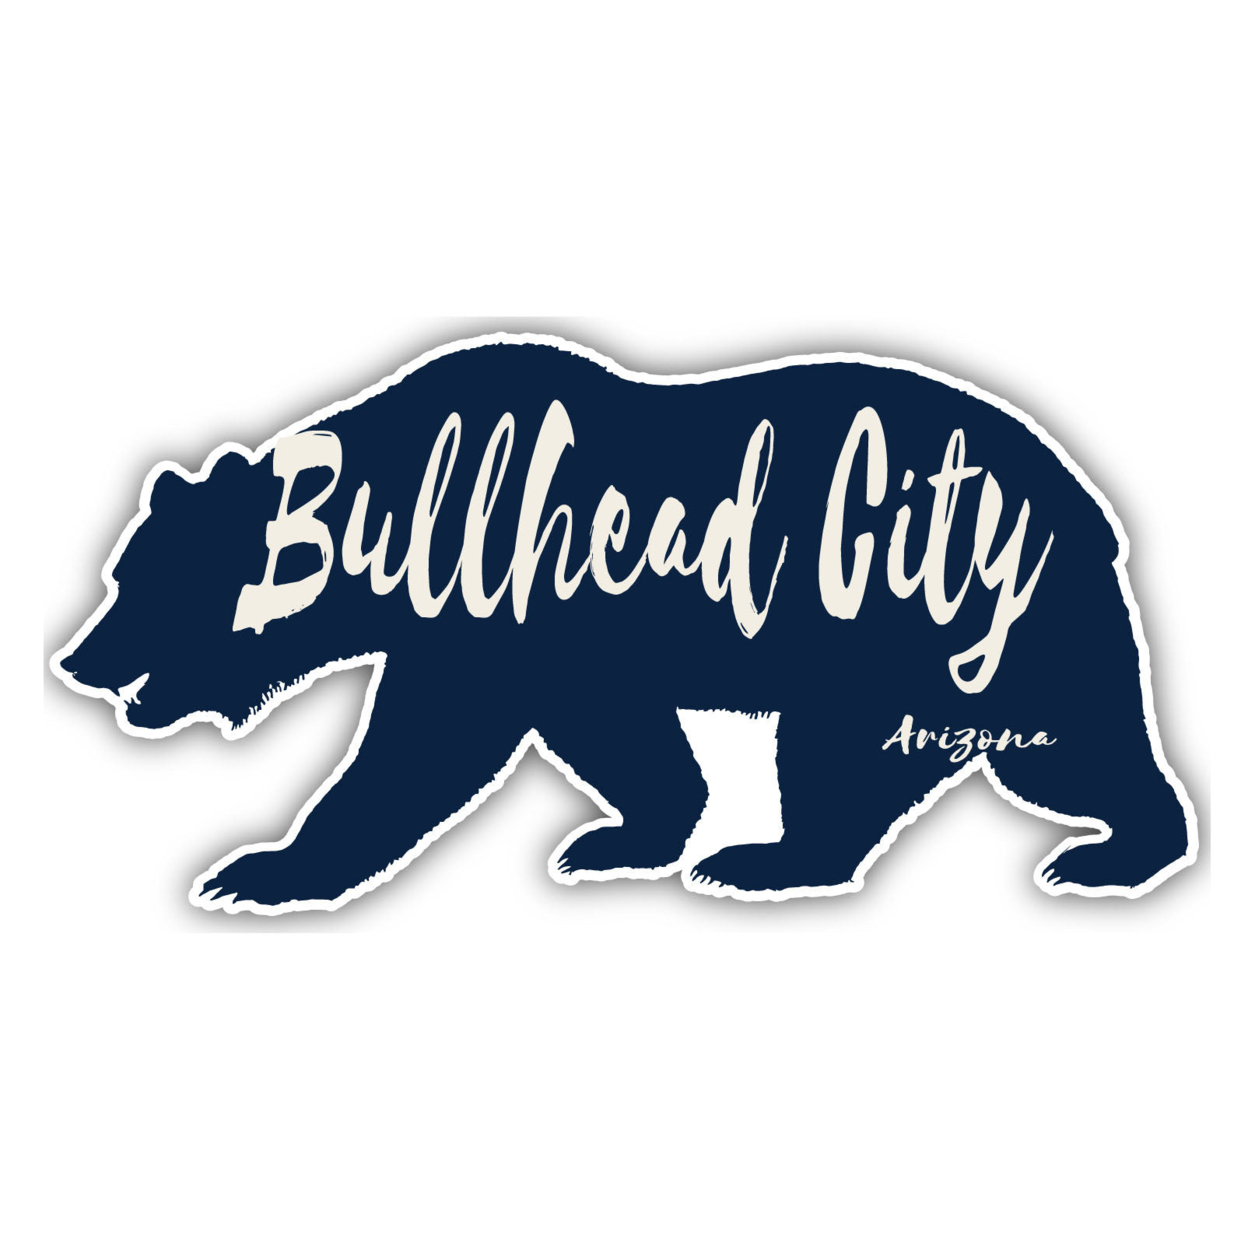 Bullhead City Arizona Souvenir Decorative Stickers (Choose Theme And Size) - 4-Pack, 6-Inch, Bear